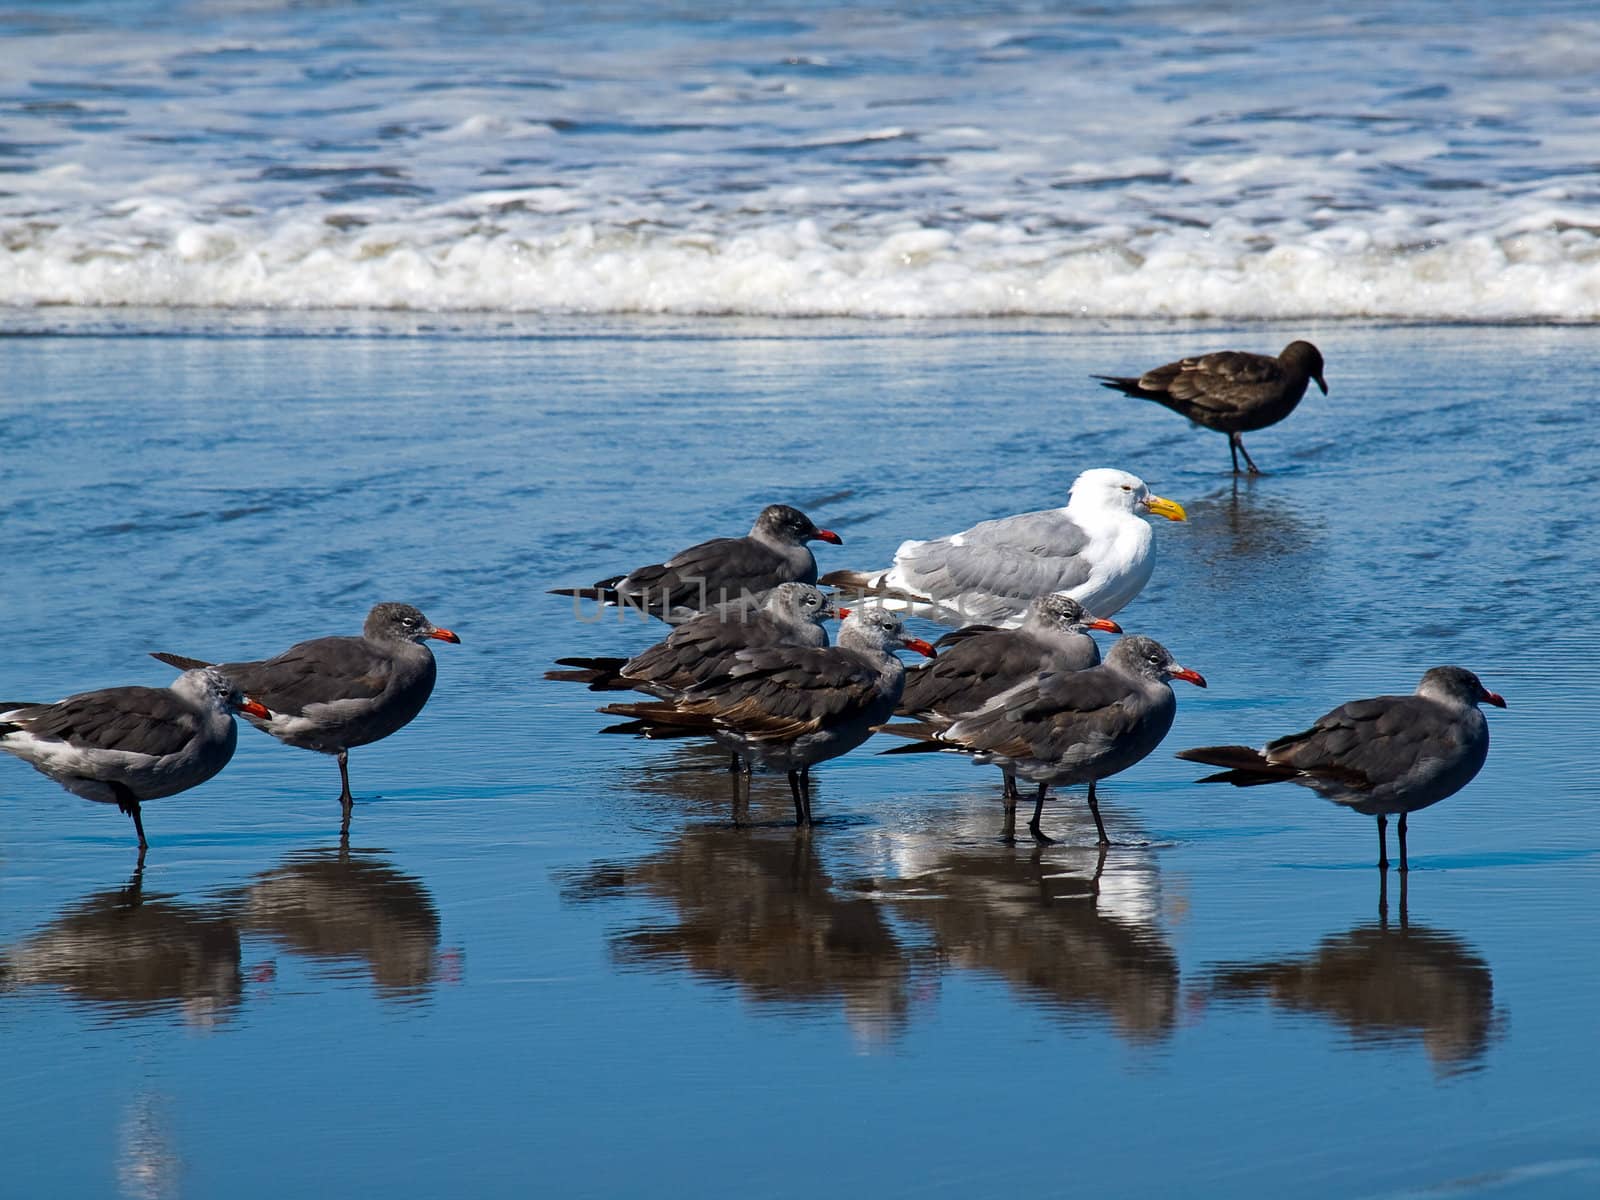 A Variety of Seabirds at the Seashore by Frankljunior